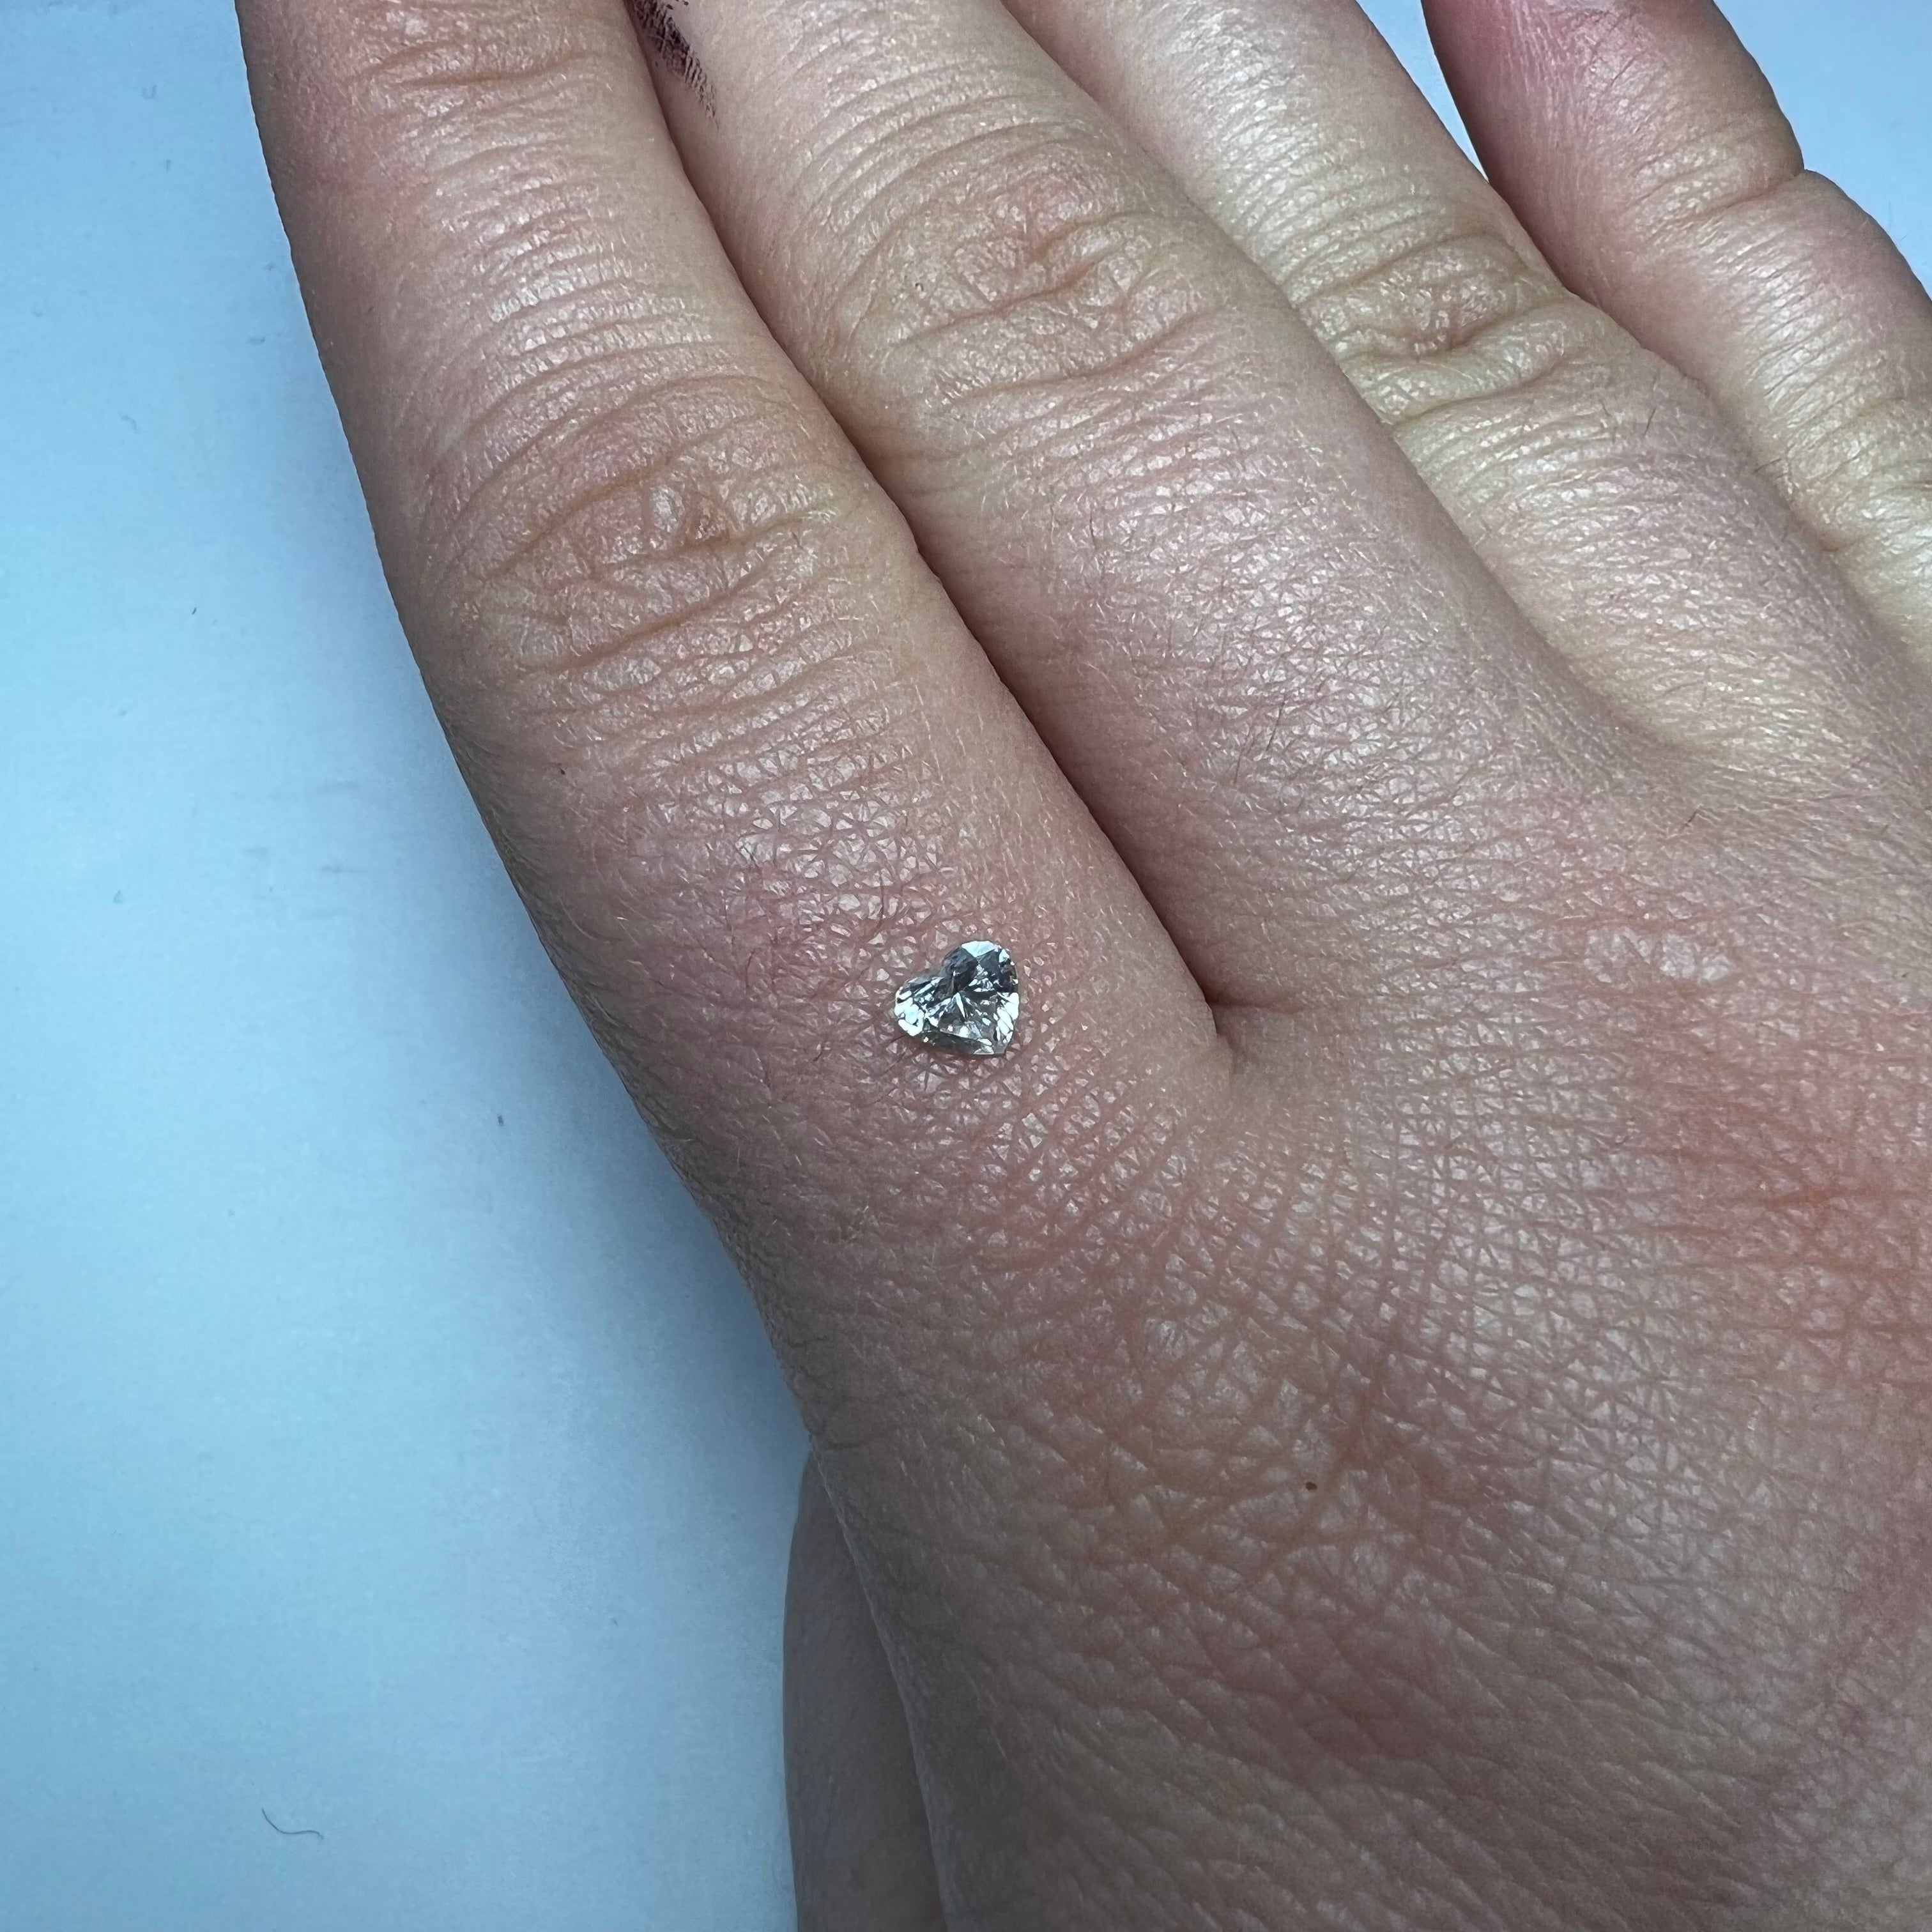 .25CT Heart Shape Diamond G I1 4.25x3.95x2.42mm Natural Earth mined